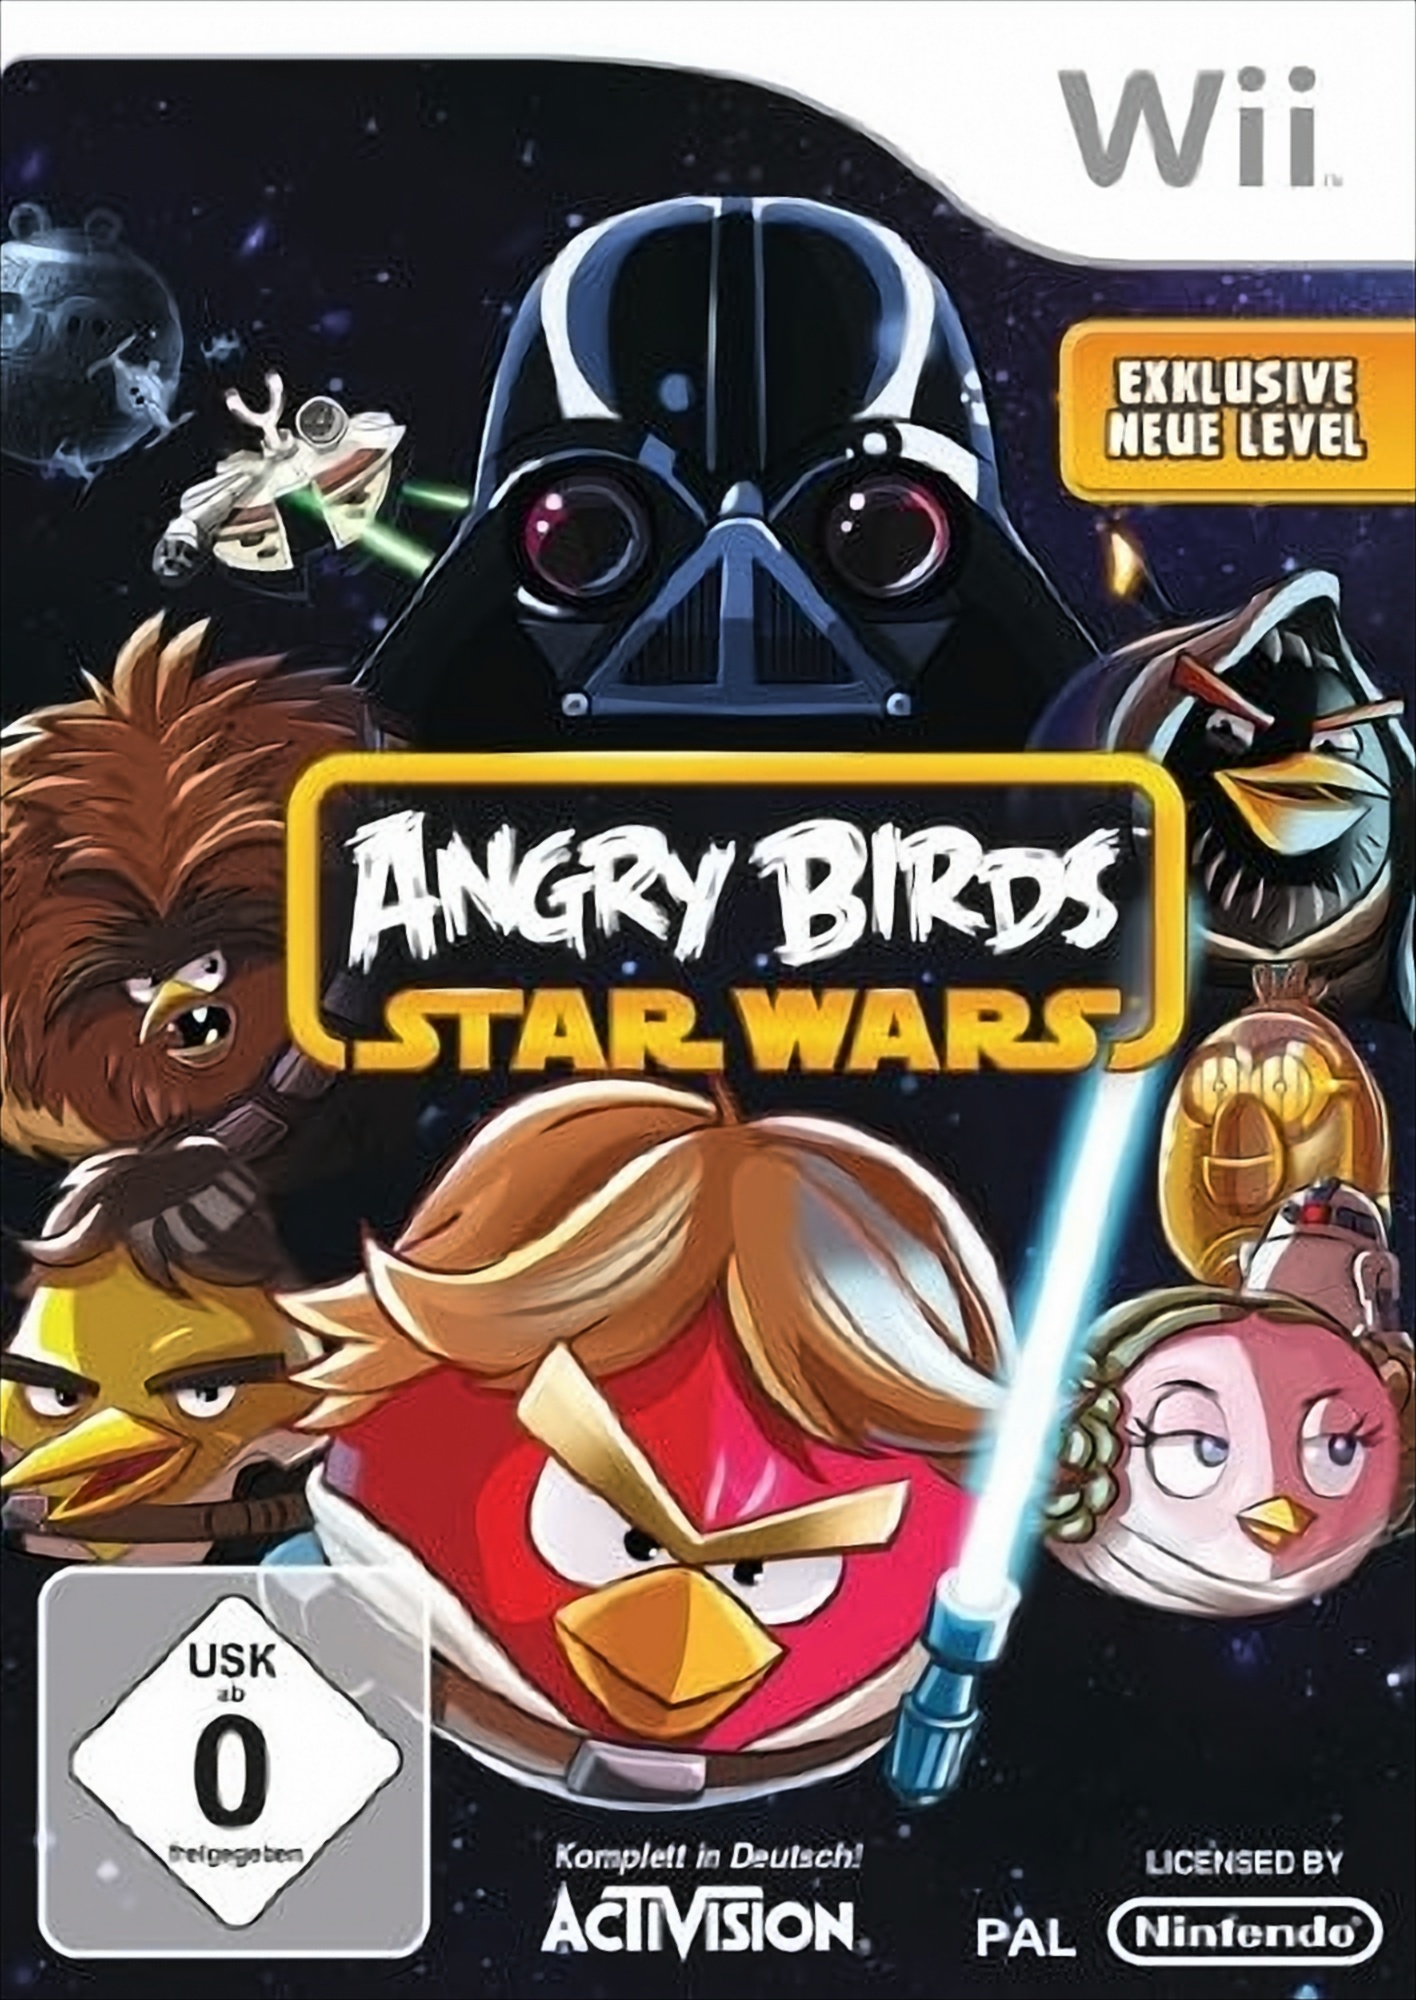 Wars [Nintendo Birds: Wii] - Angry Star